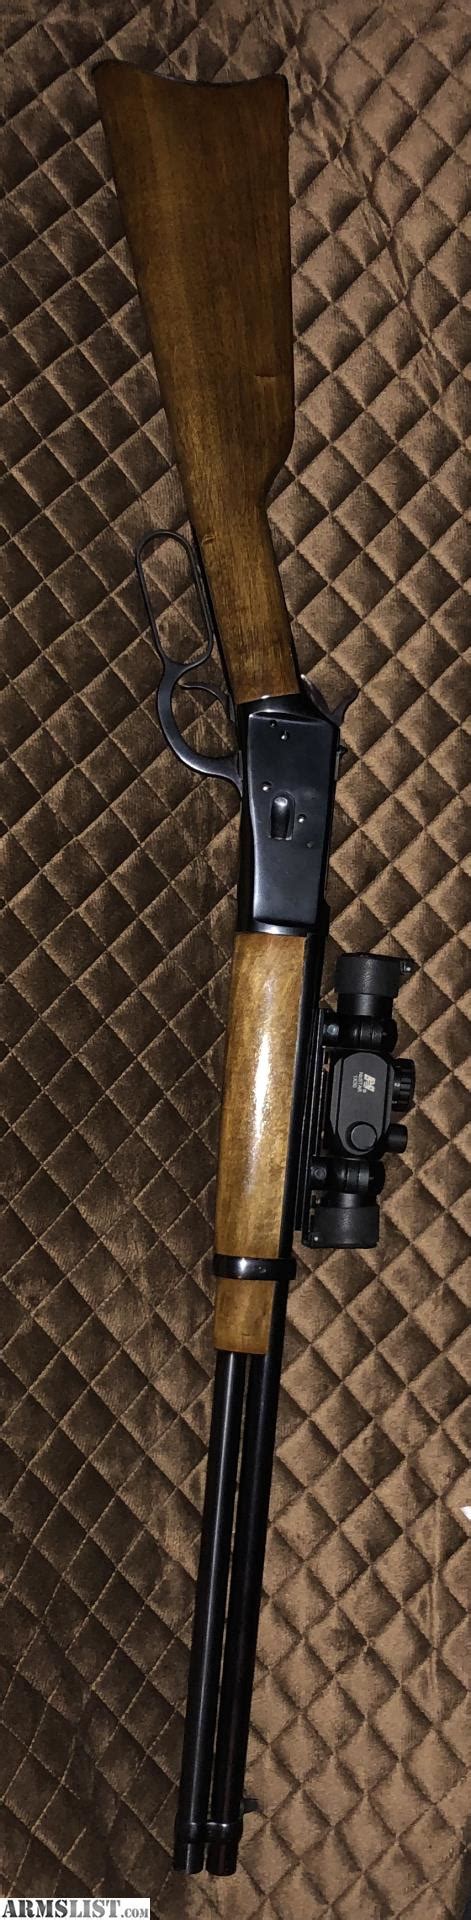 Armslist For Sale Rossi Puma M92 44 Magnum Lever Action